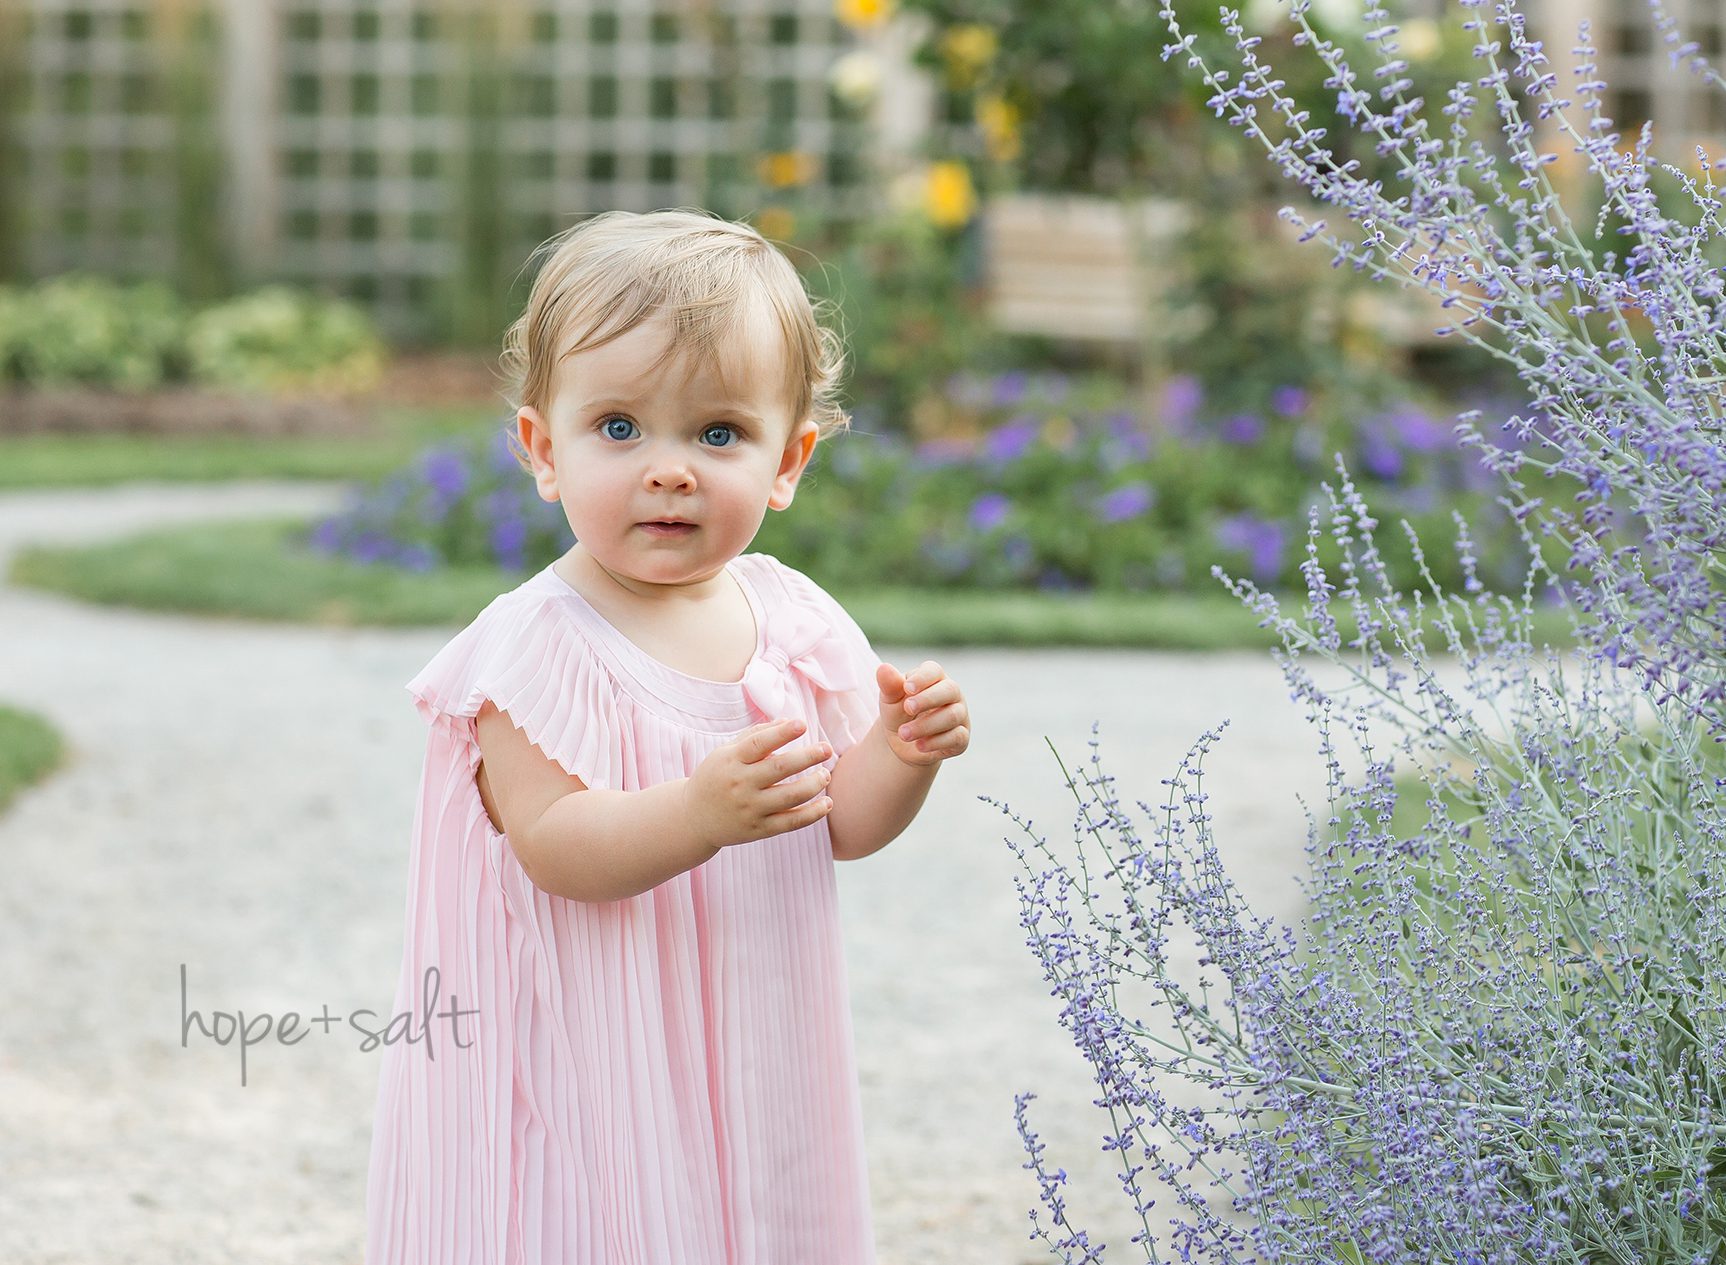 first birthday outdoor summer family photos in lavender flower garden_milton baby photographer hope and salt